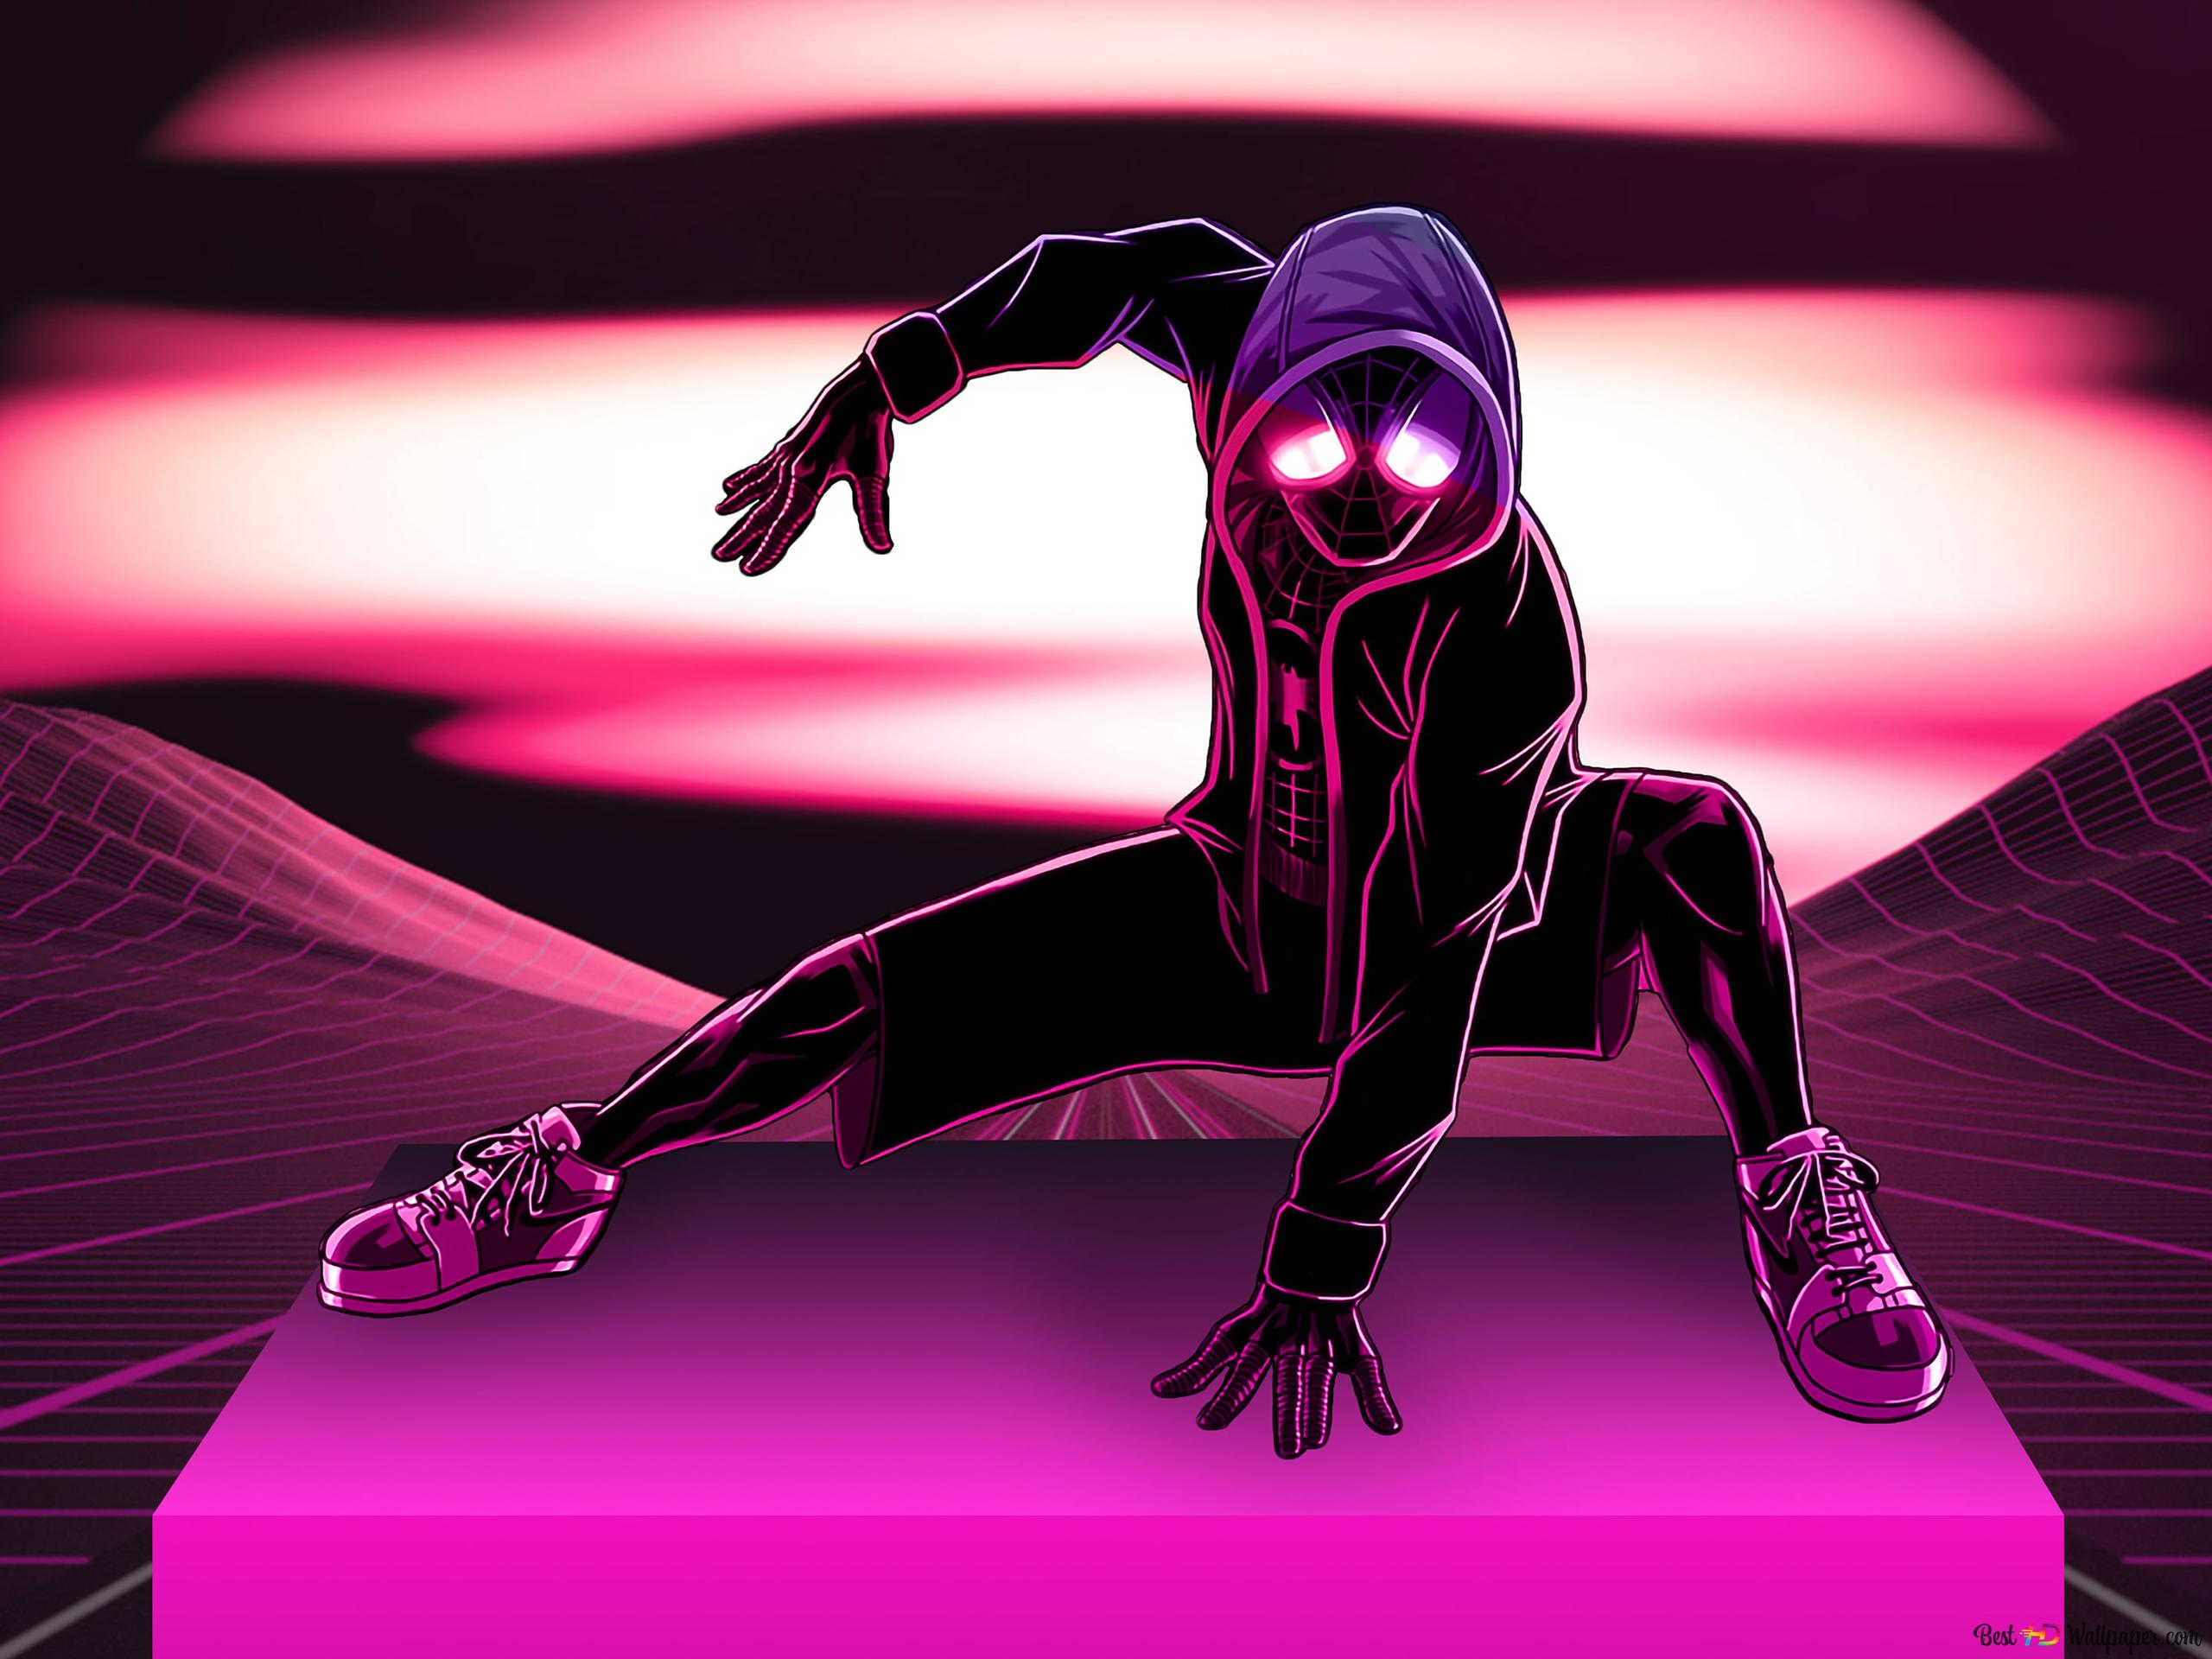 Sneaker superhero displayed in neon light pink and purple setting wearing spiderman costume 4K wallpaper download